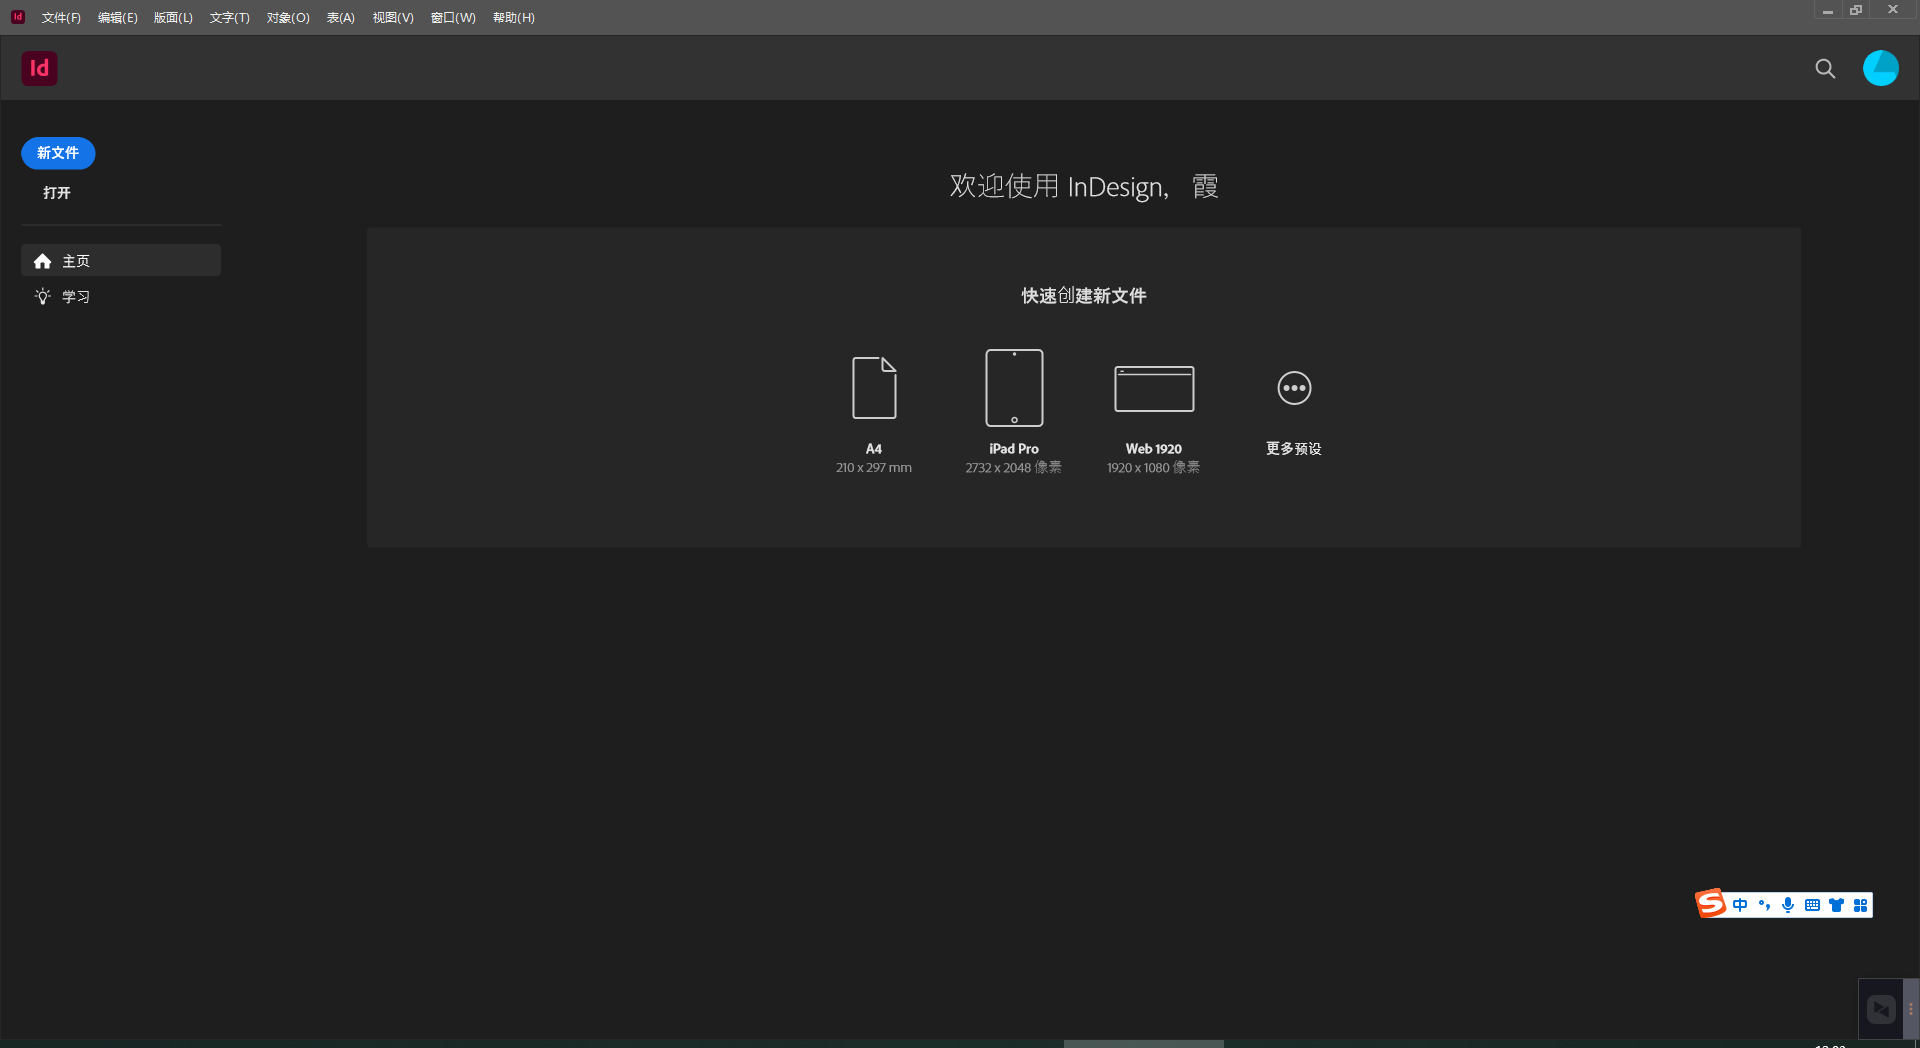 Adobe InDesign 2023 v18.4.0.56 download the new version for ipod